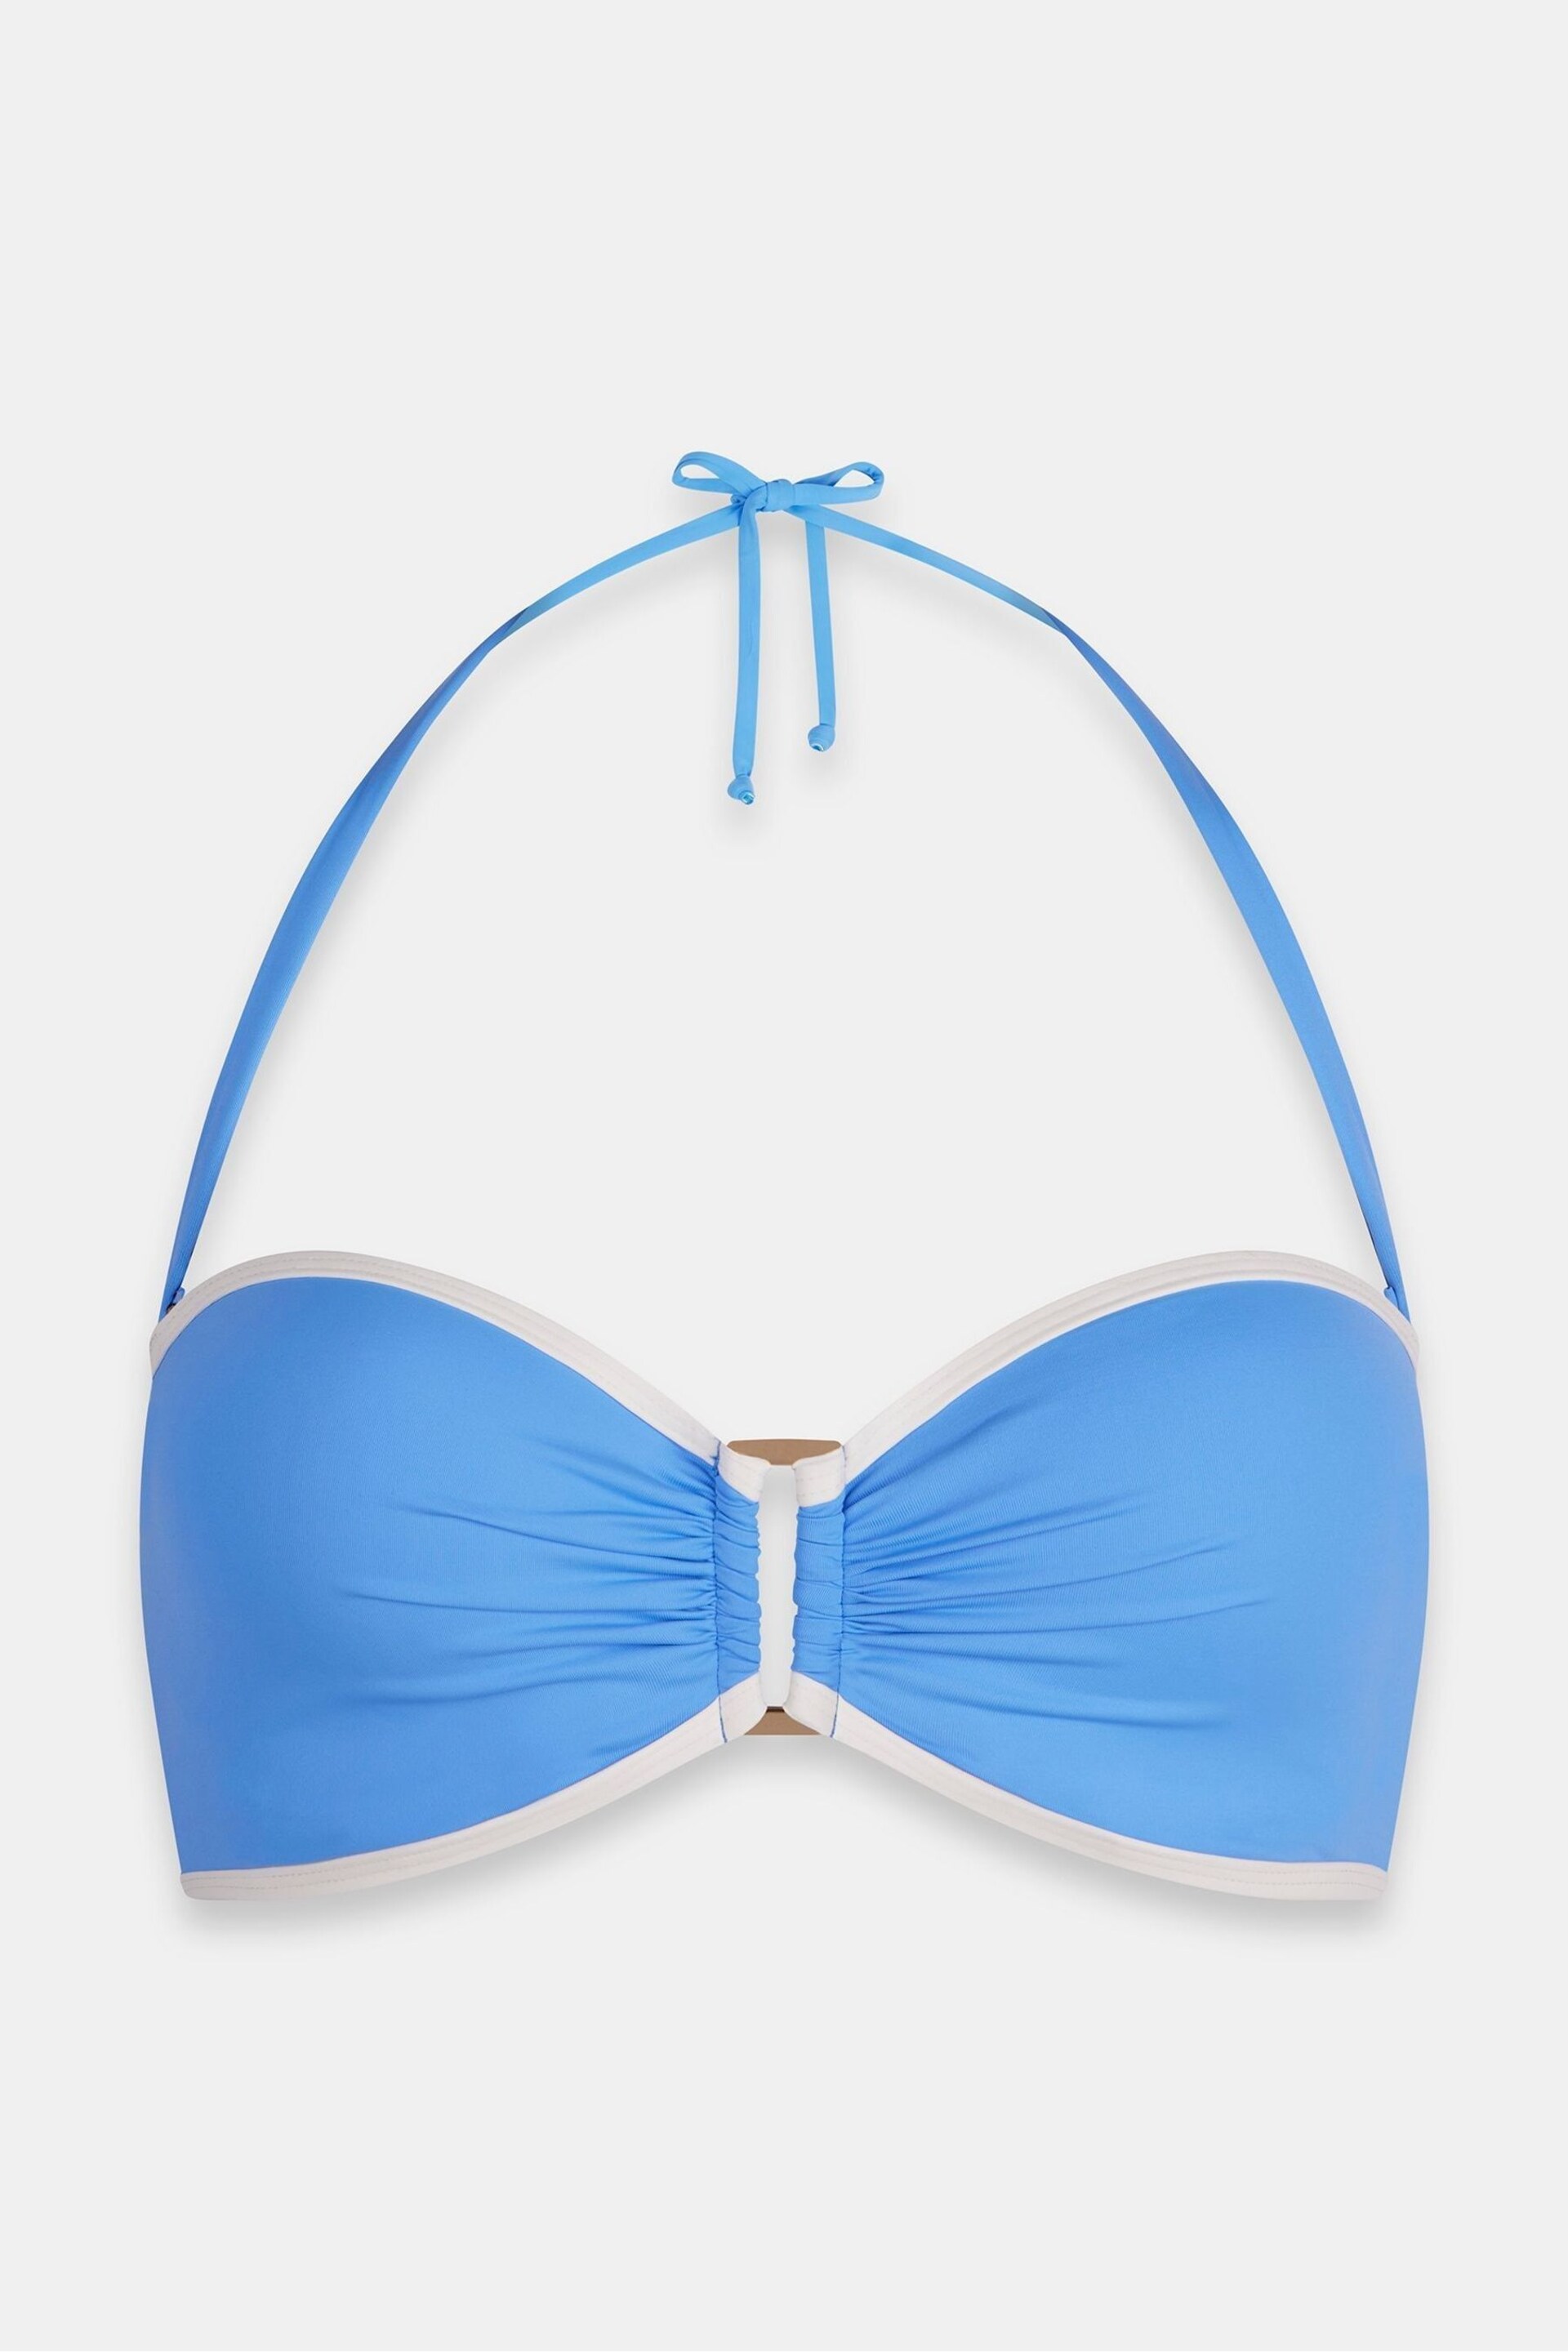 Mint Velvet Blue Contrast Bikini Top - Image 5 of 6